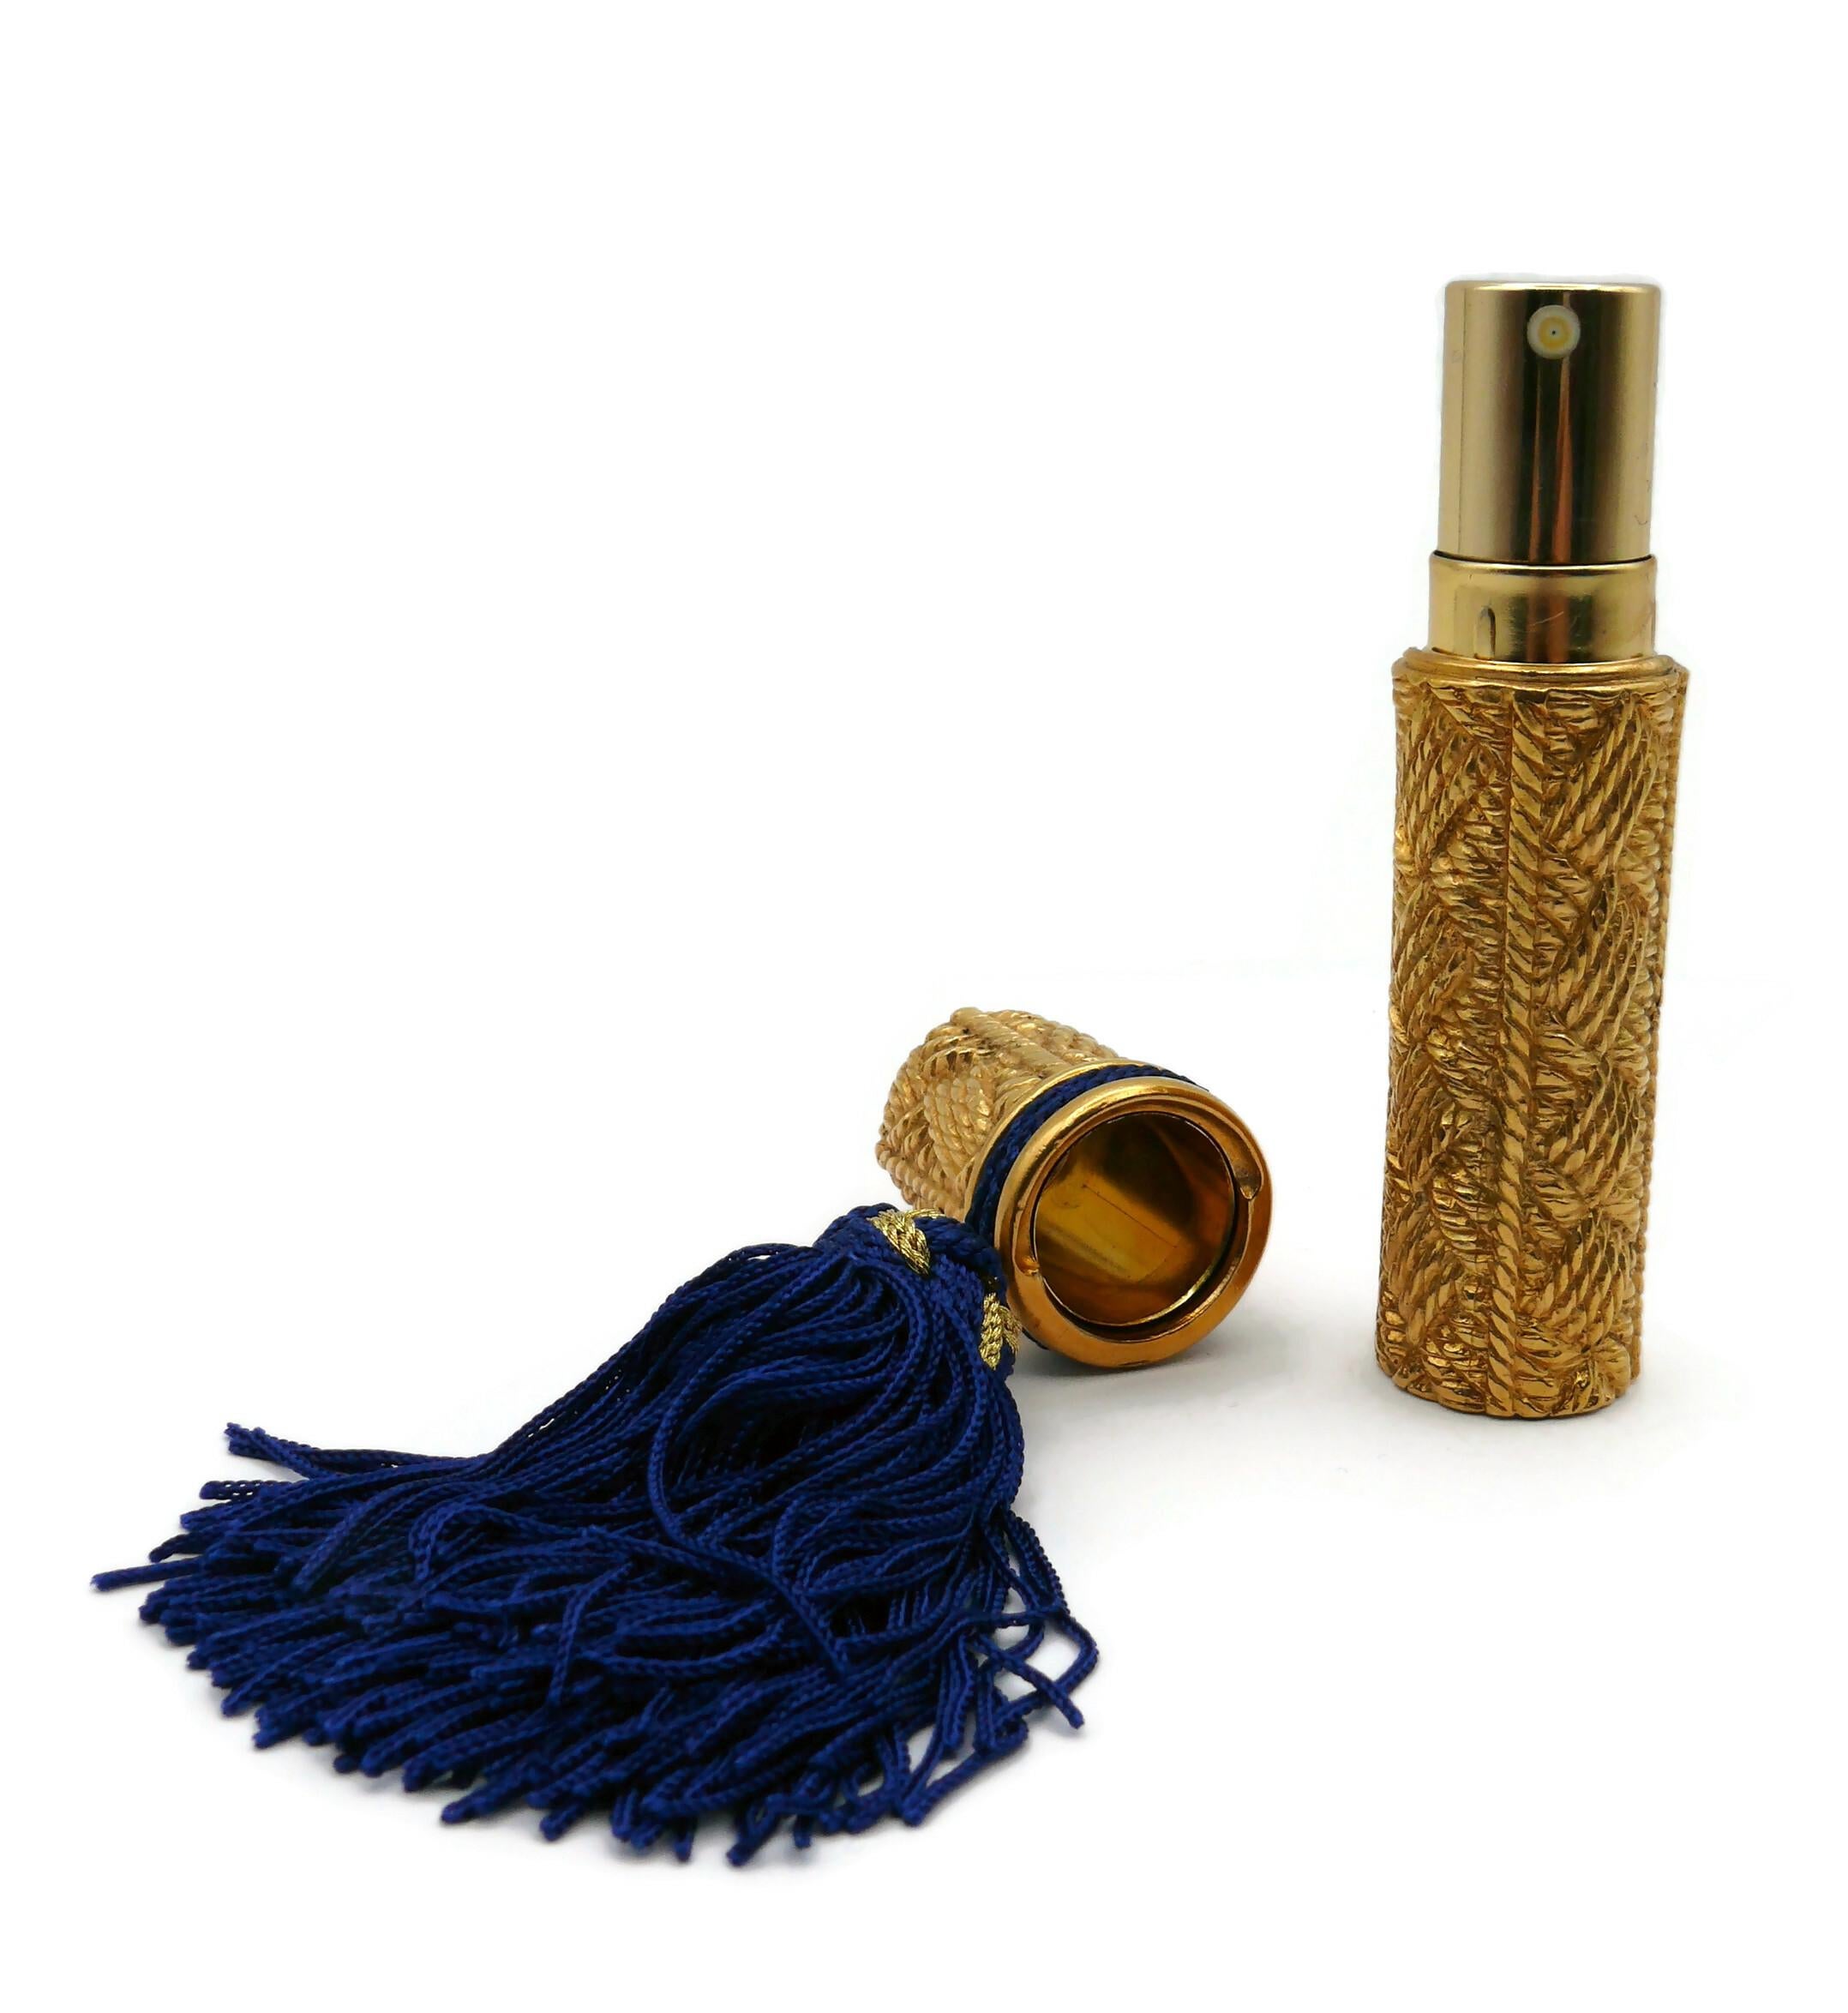 ISABEL CANOVAS Parfum by ROBERT GOOSSENS Vintage Atomizer For Sale 6